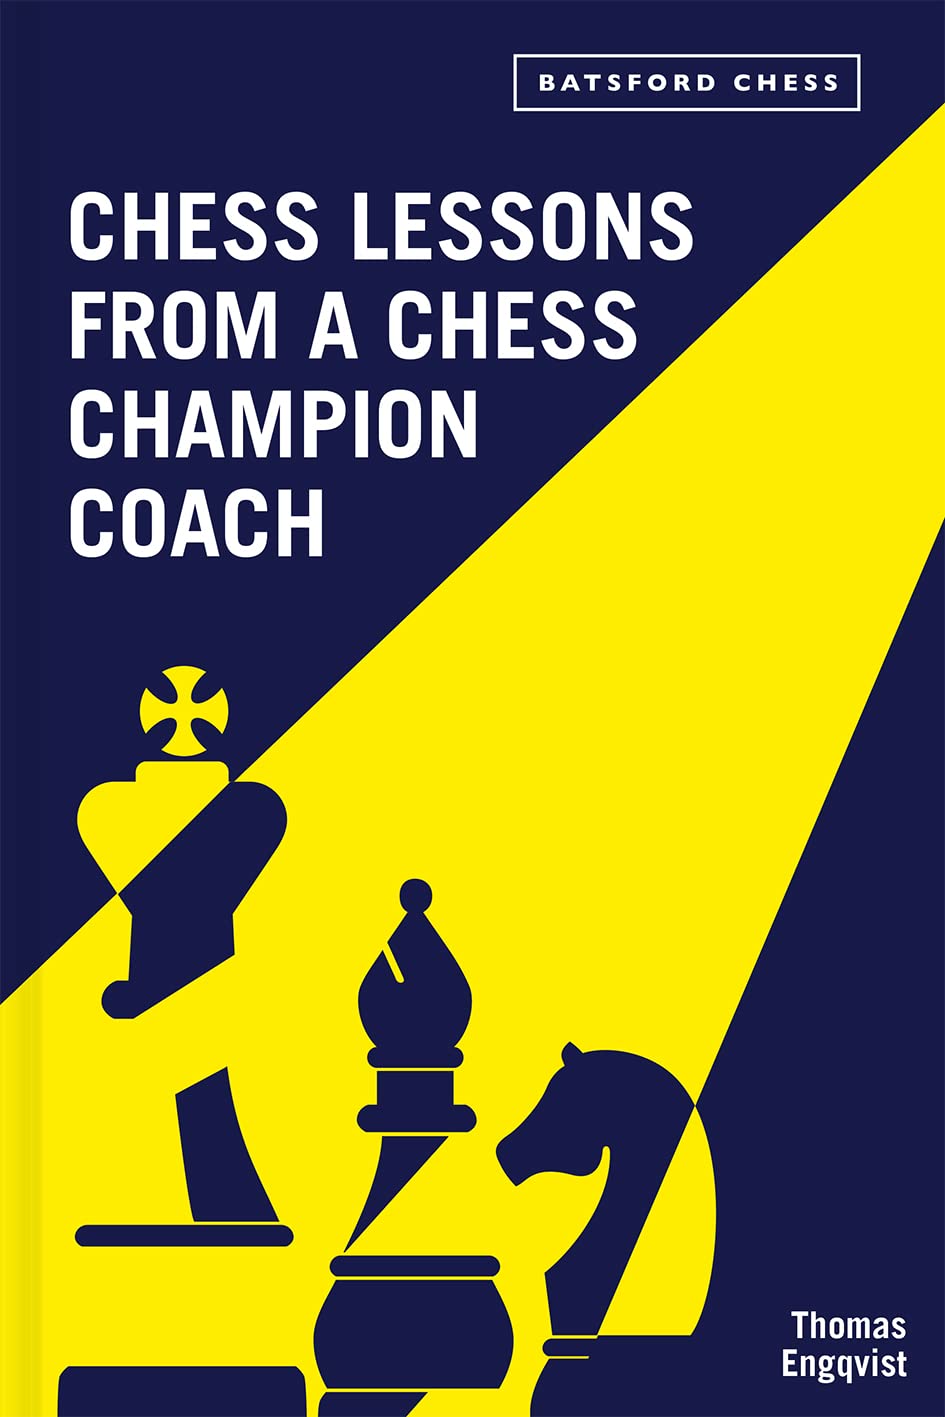 Chess Lessons from a Champion Coach, Thomas Engqvist, Batsford, 13th April 2023, ISBN-13 ‏ : ‎ 978-1849948043